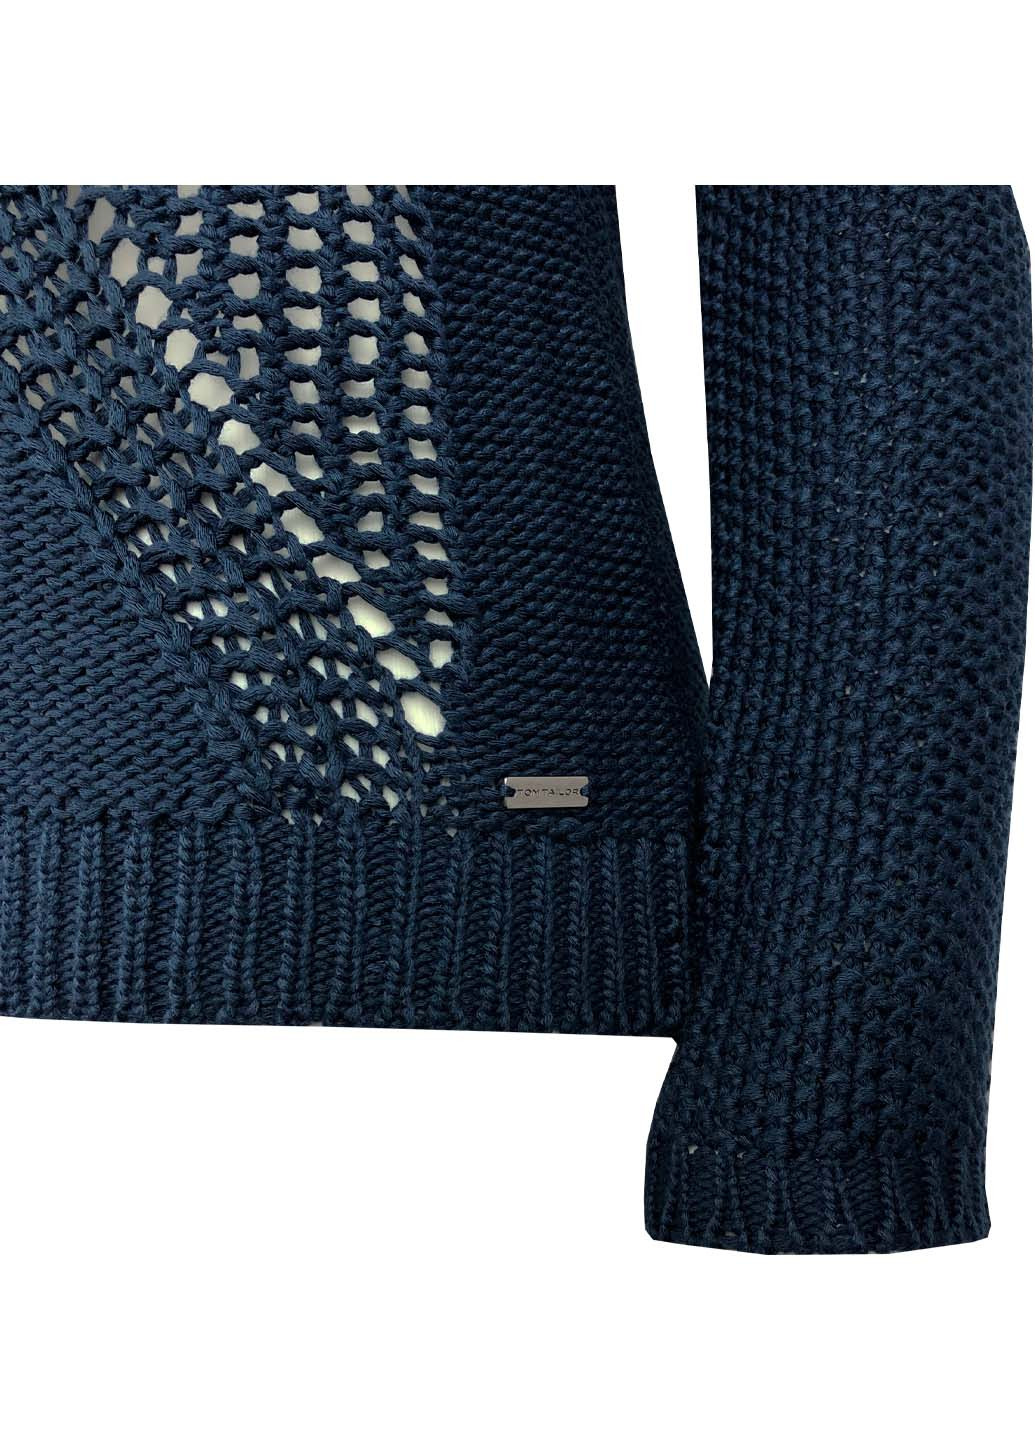 Синий демисезонный свитер джемпер Tom Tailor